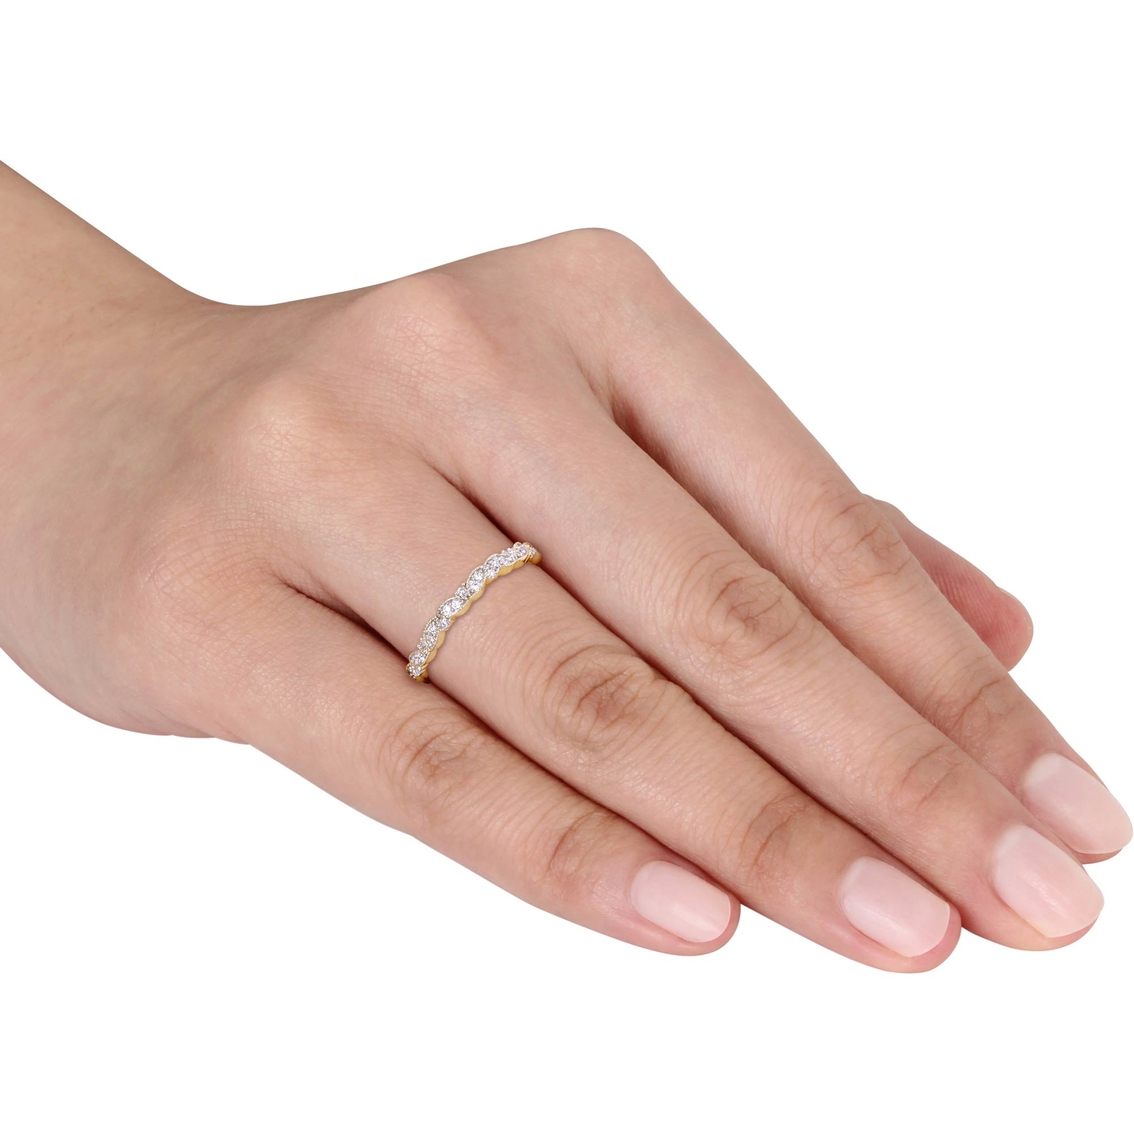 1/4 CT TW Diamond Eternity Ring in 14k White Gold - Image 4 of 4